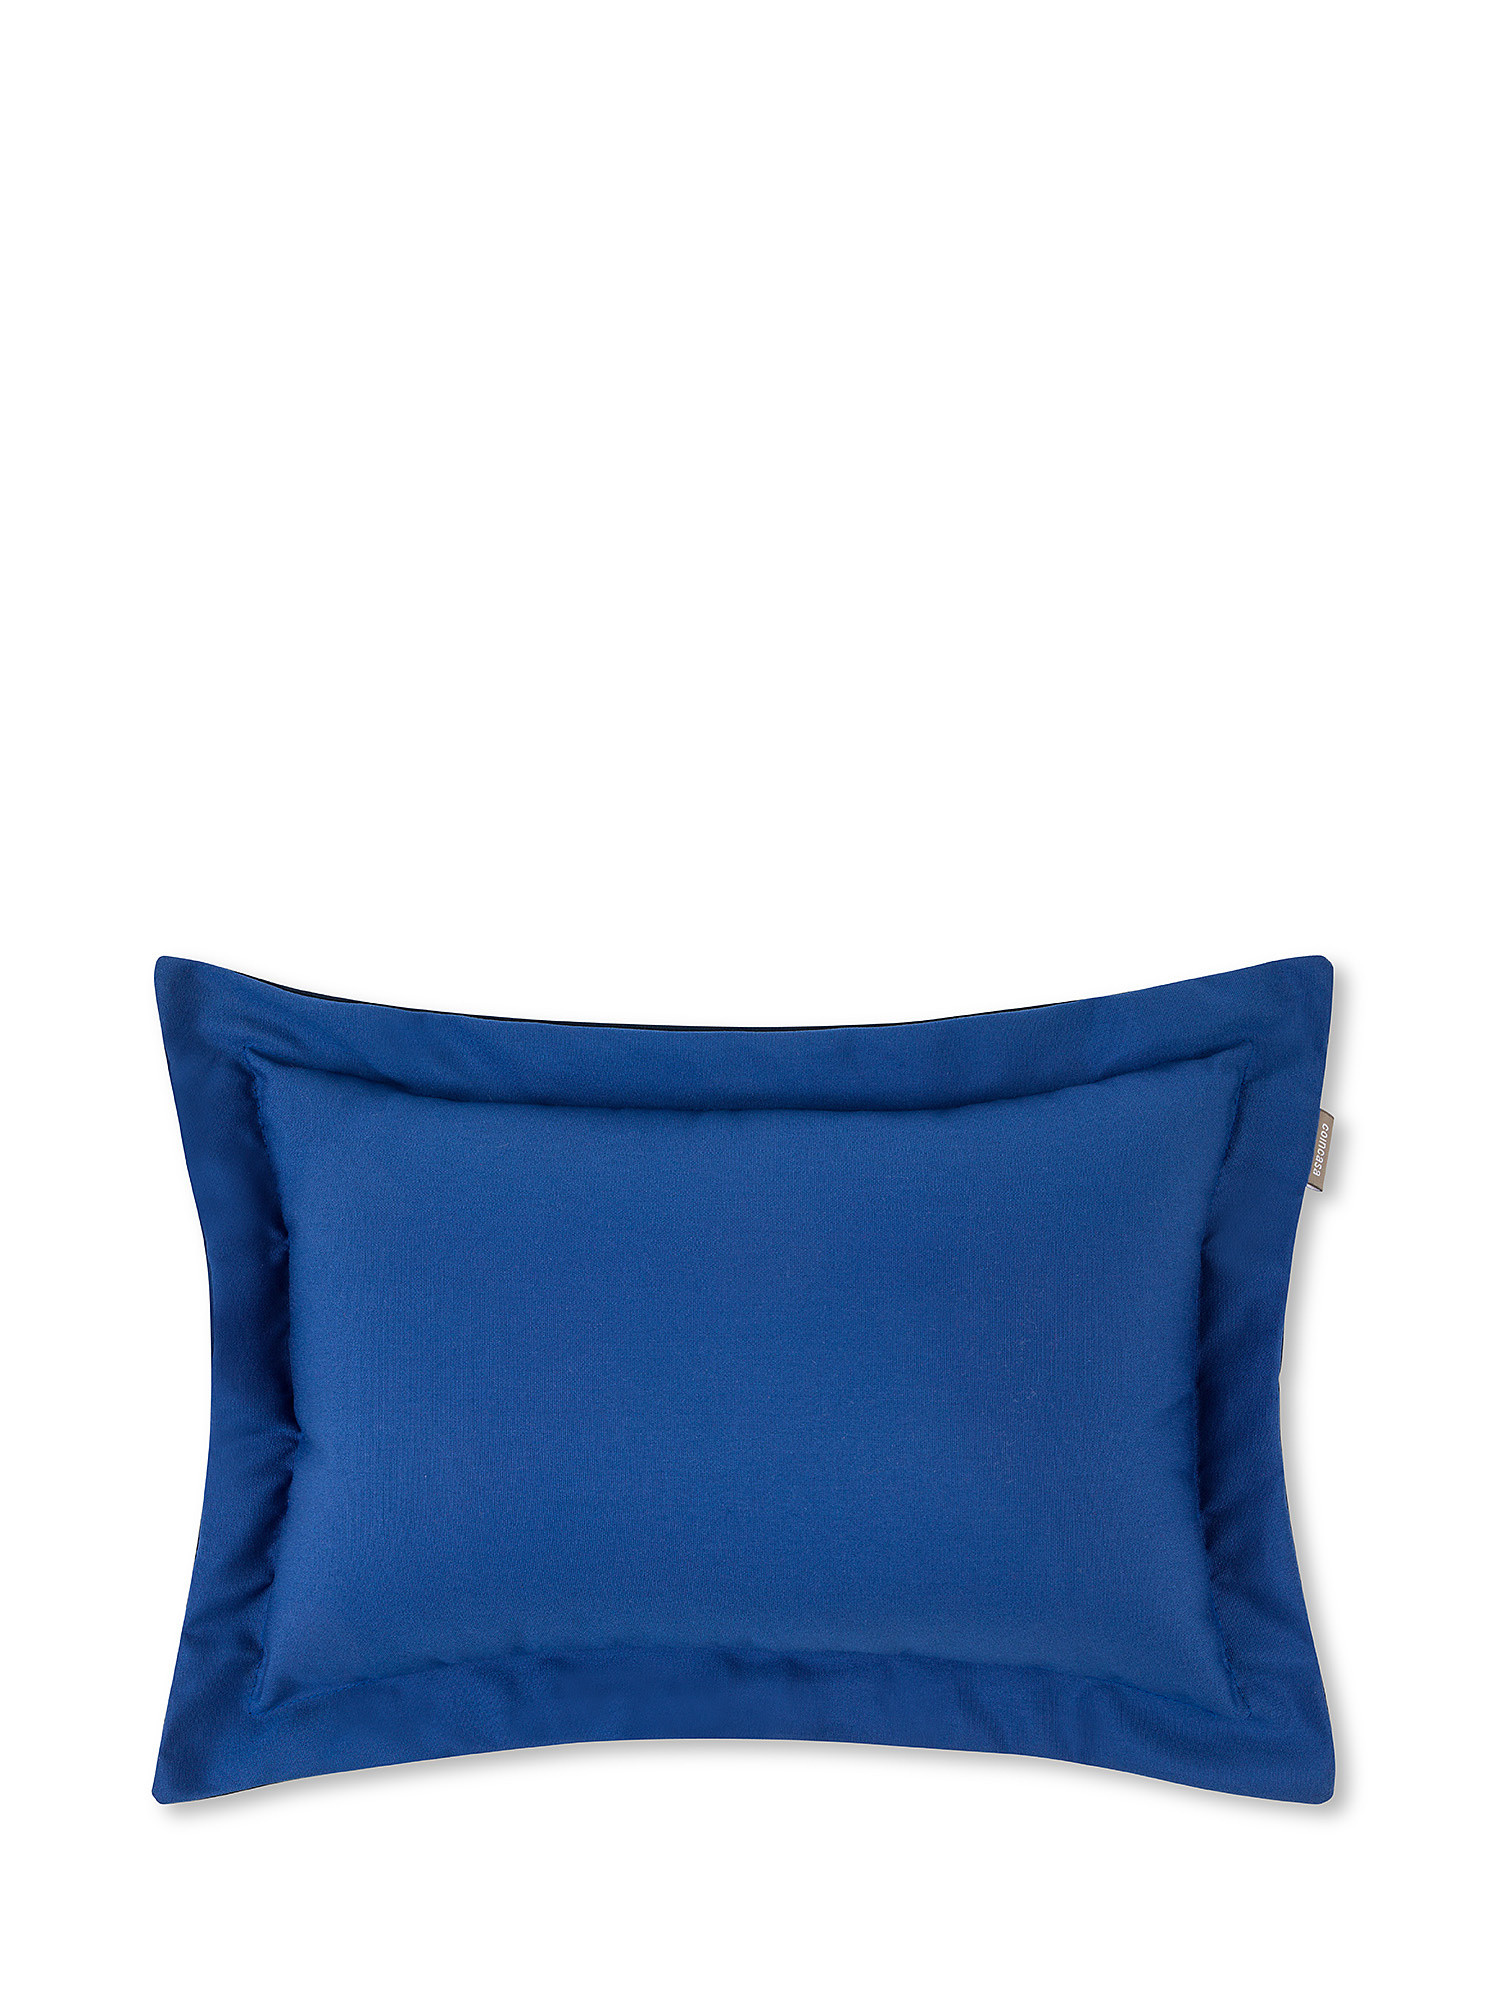 Cuscino da esterno in tessuto double color 30x50cm, Blu, large image number 0